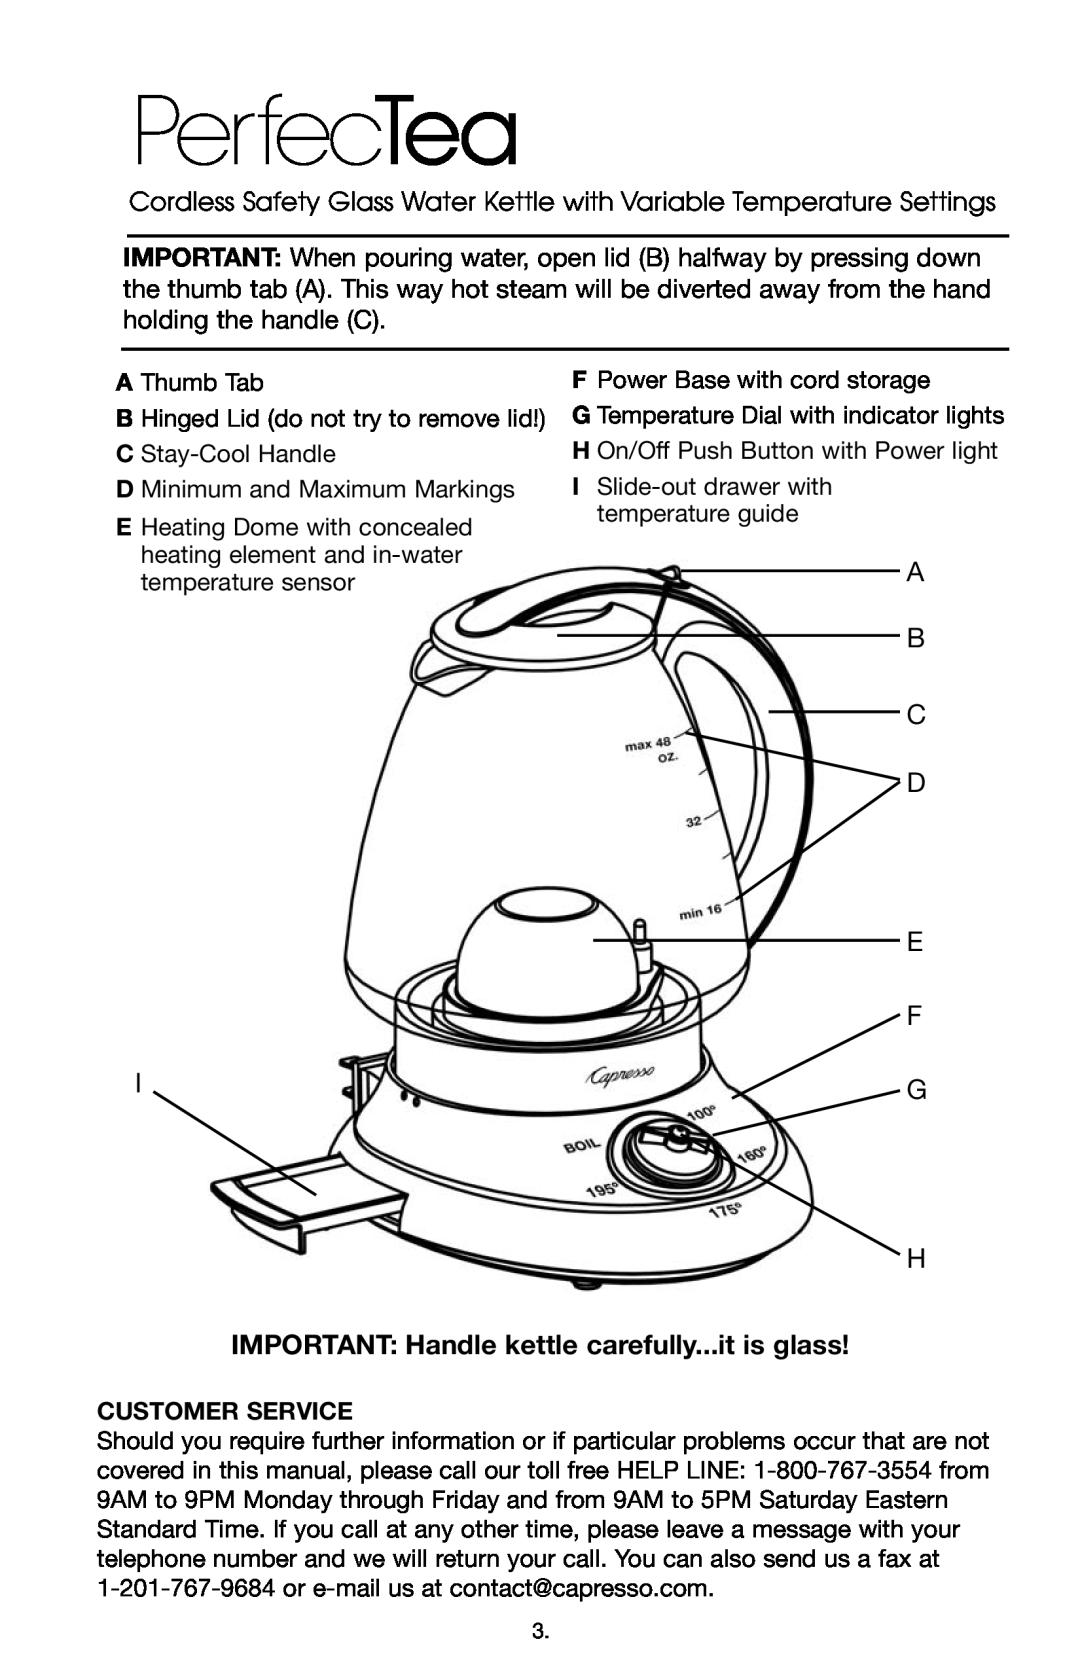 Capresso PT1109, 260 IMPORTANT Handle kettle carefully...it is glass, Customer Service, PerfecTea, A B C D E F G 